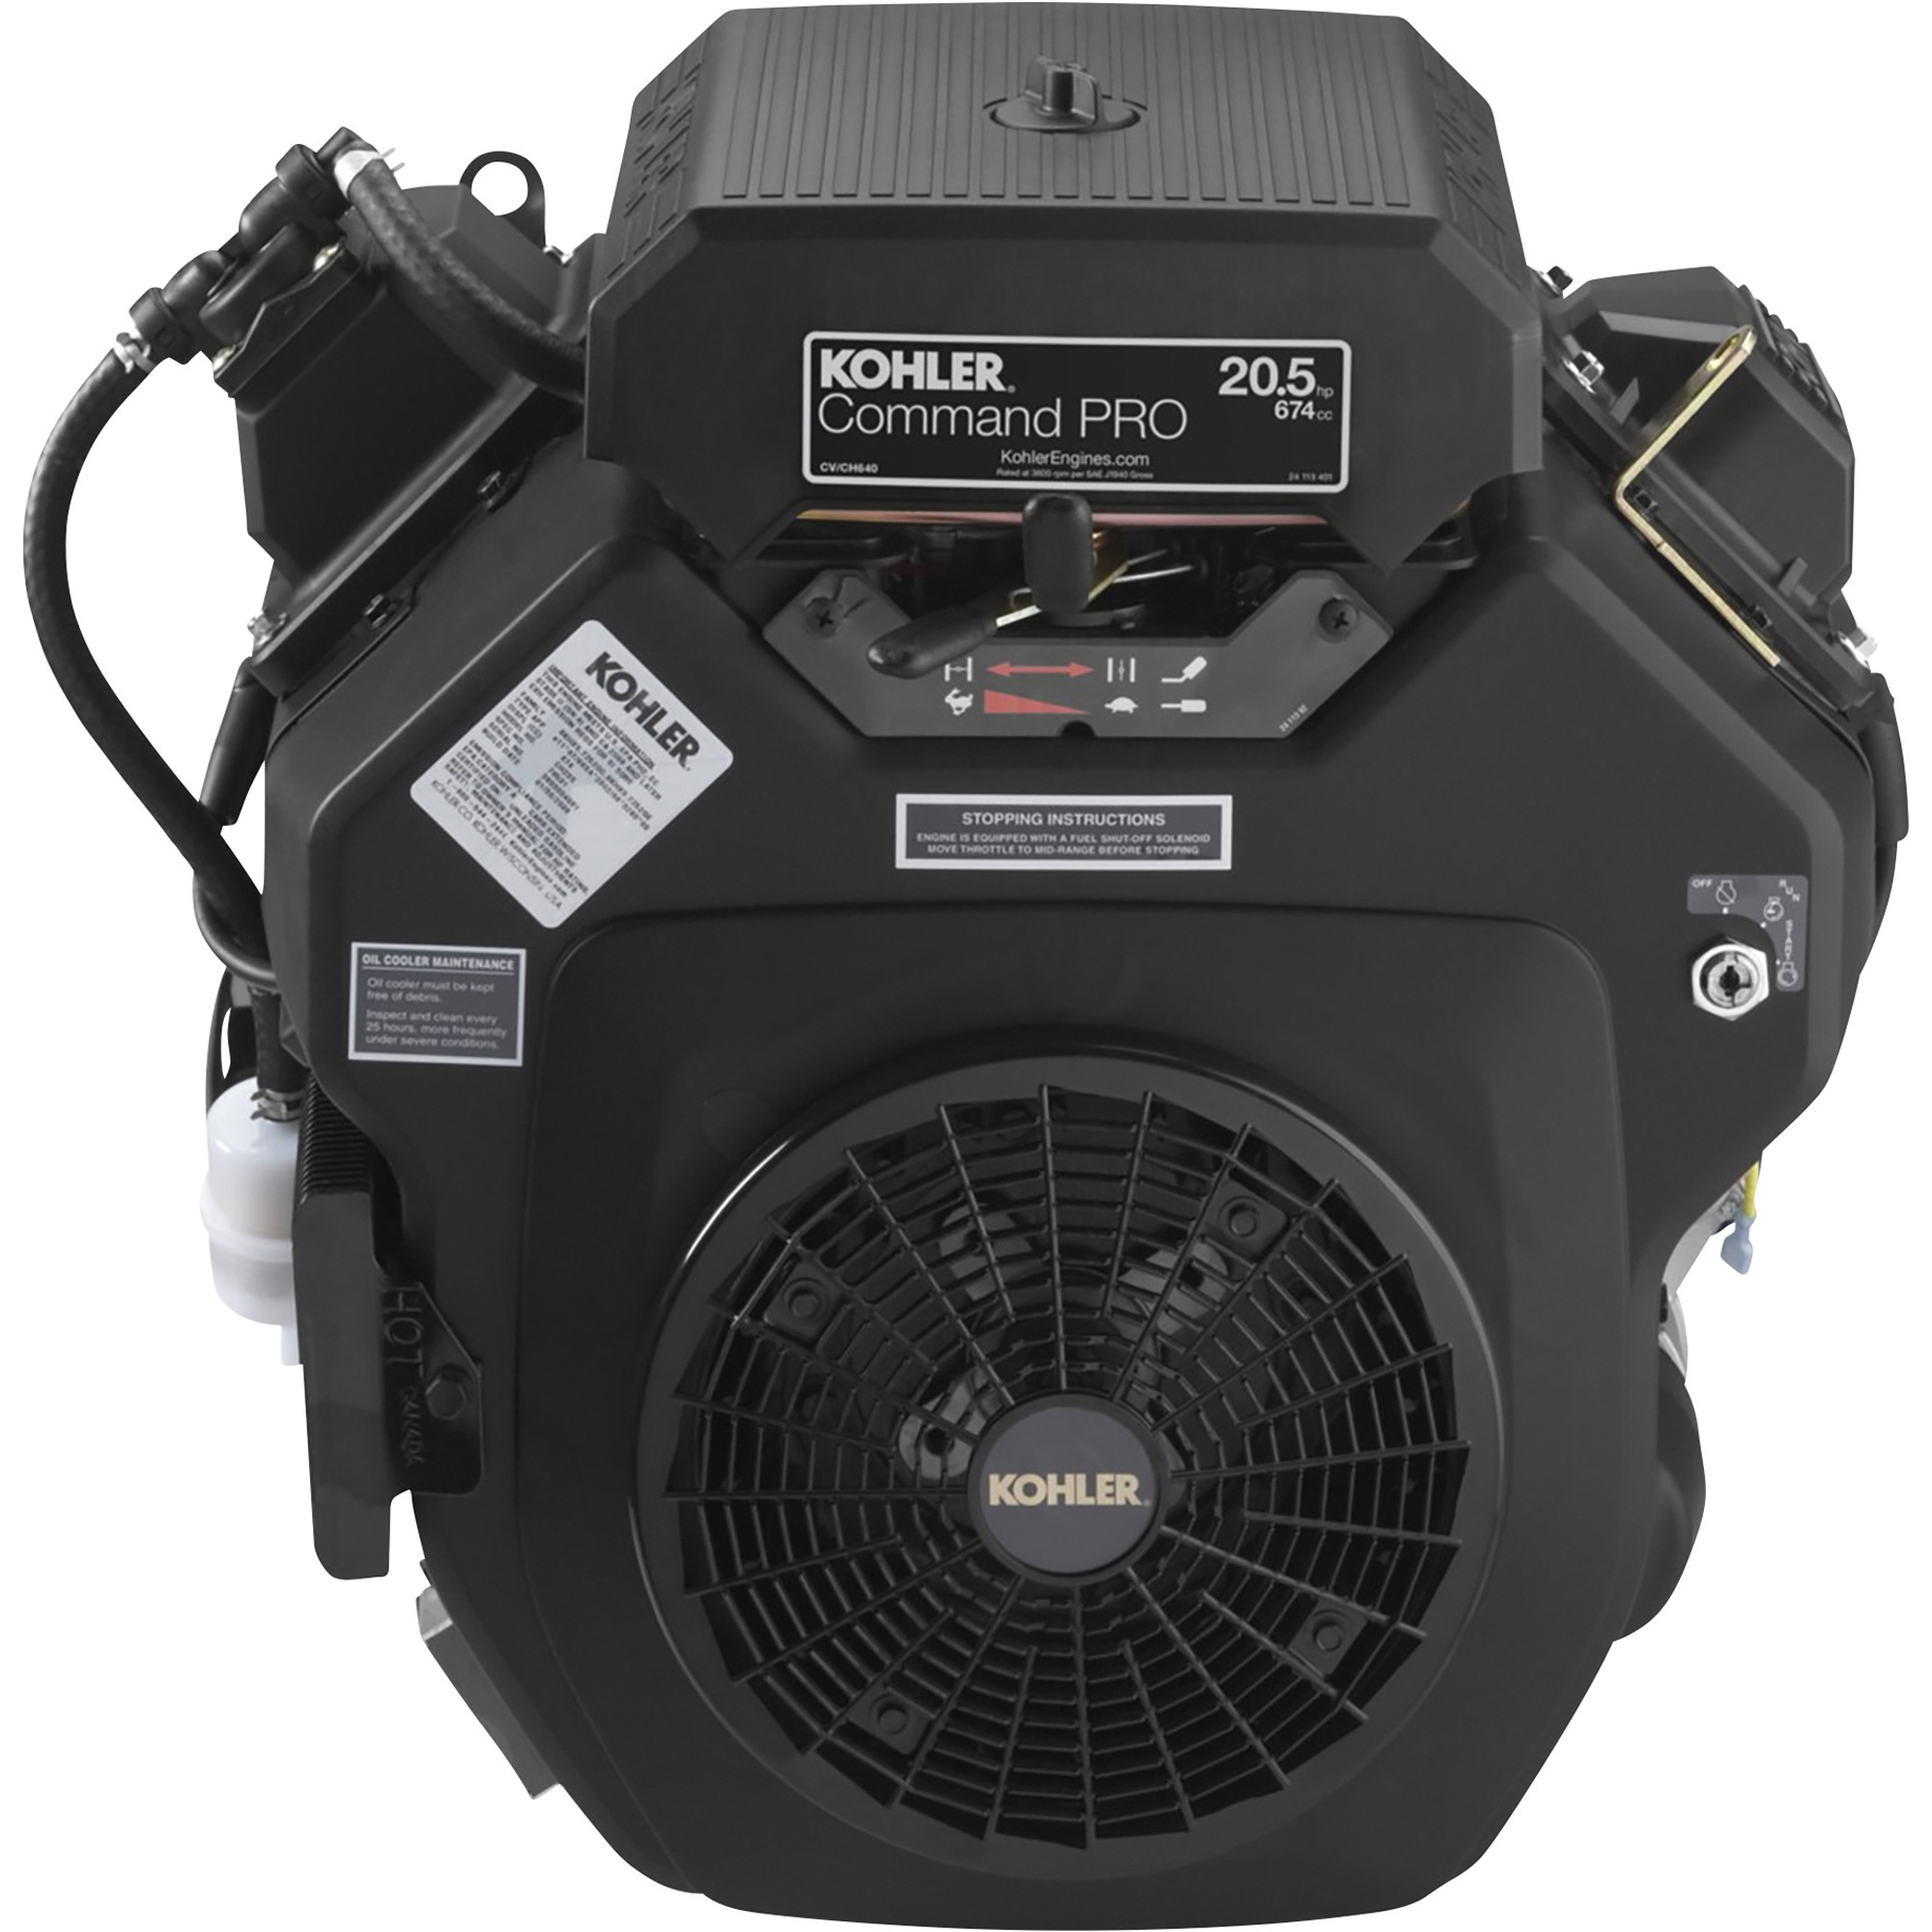 Kohler Command OHV Horizontal Engine with Electric Start — 674cc, 20.5 HP, 1.125Inch x 4Inch Shaft, Model PA-CH640-3230 -  Kohler Engines